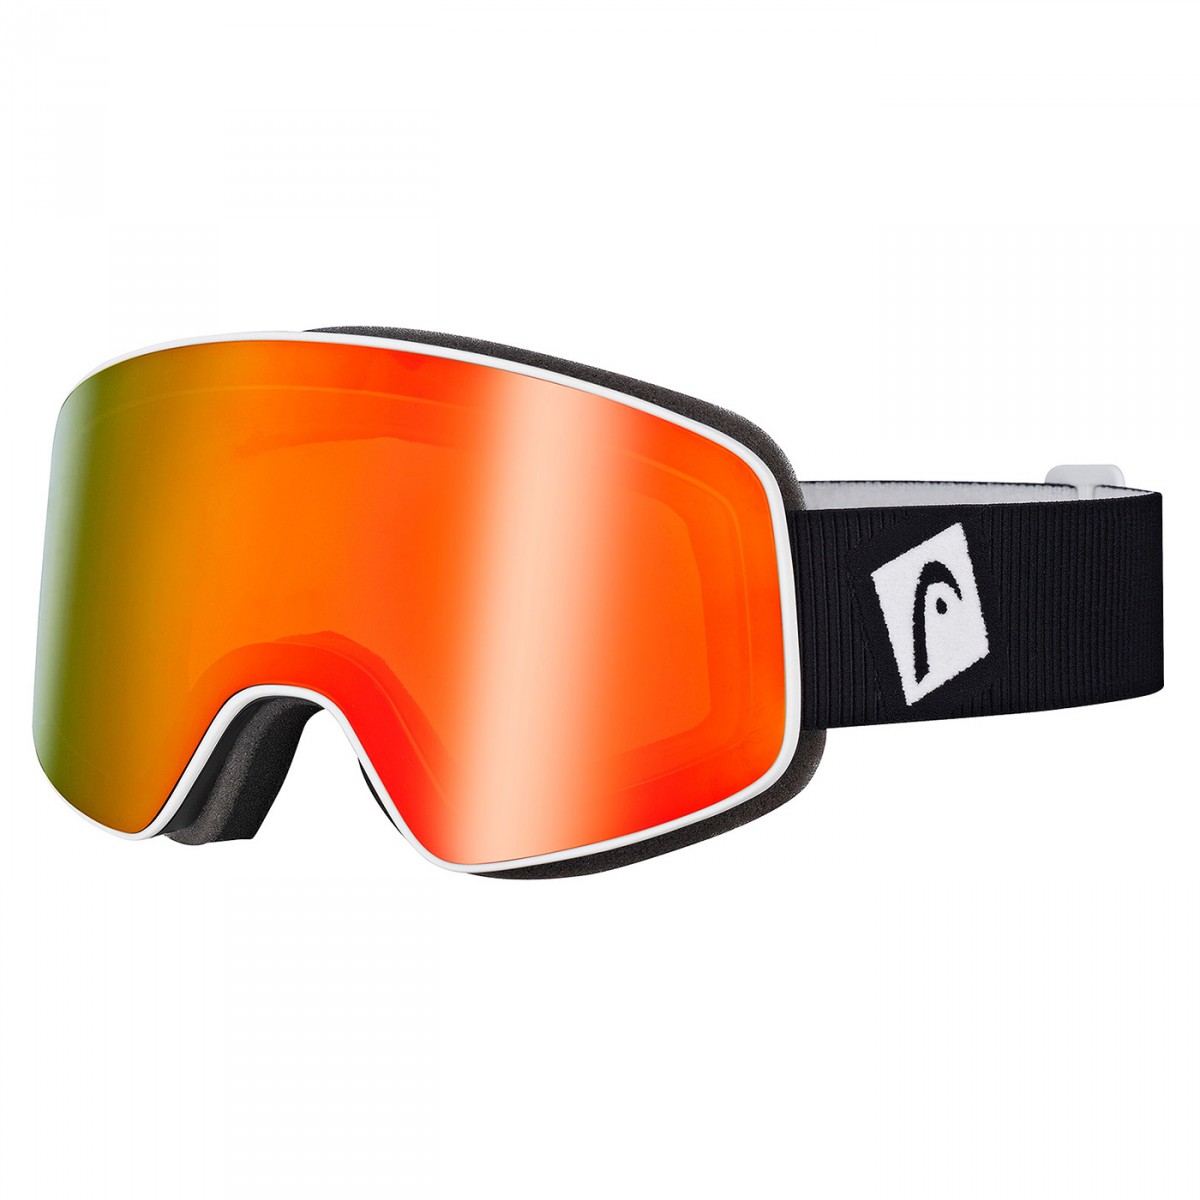 Head ski goggles